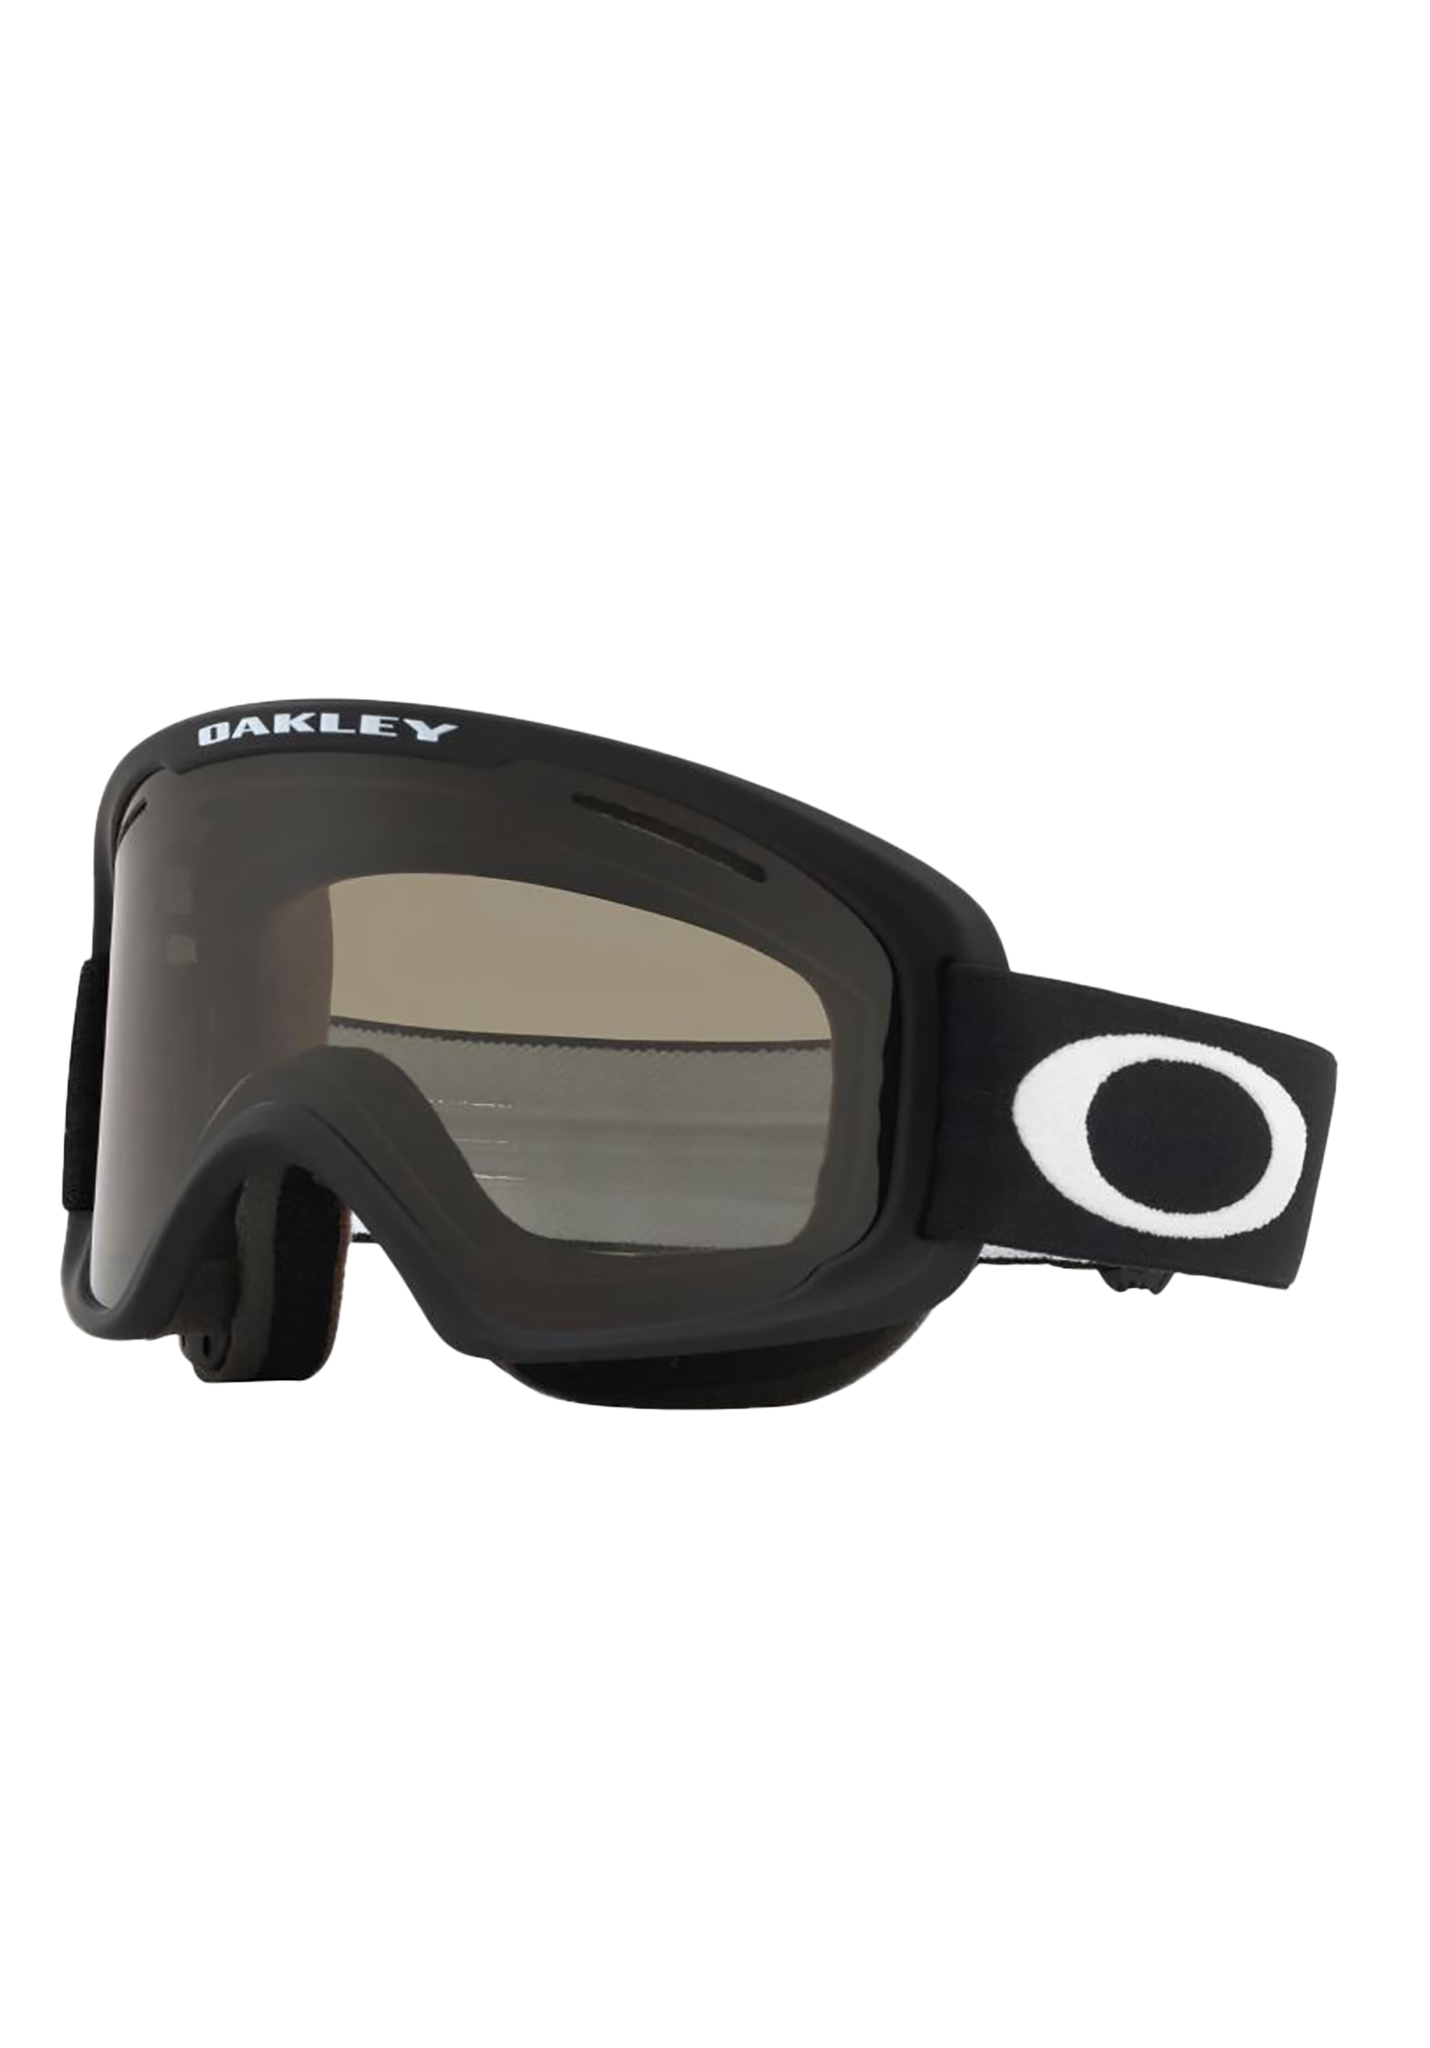 Oakley O Frame 2.0 Pro L Snowboardbrillen mattschwarz/dunkelgrau One Size